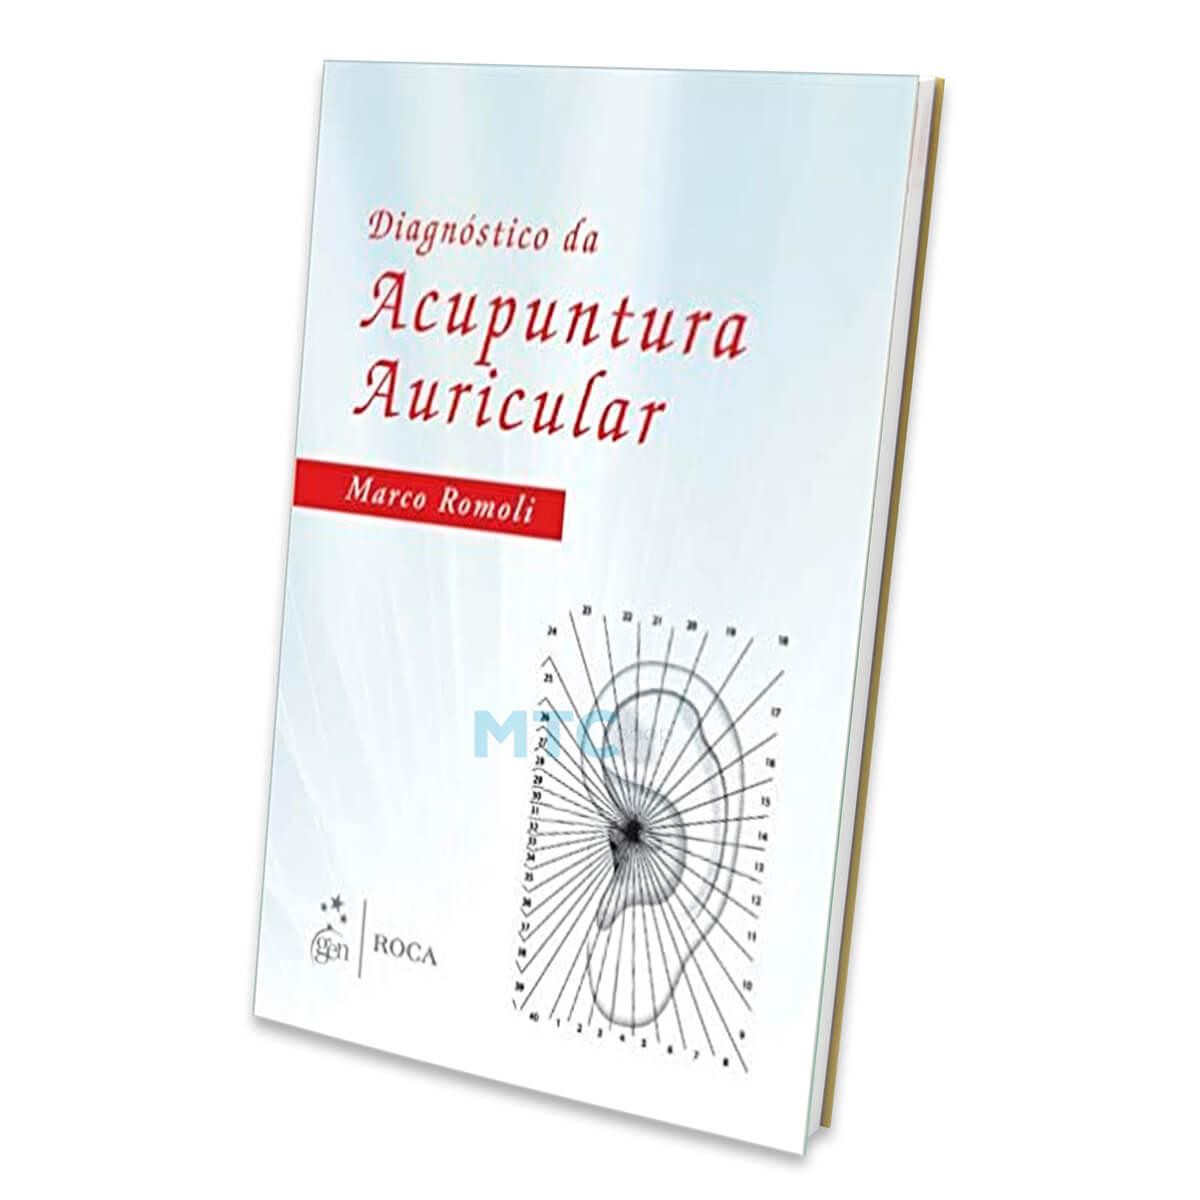 Diagnóstico da Acupuntura Auricular - Marco Romoli - Ed Roca